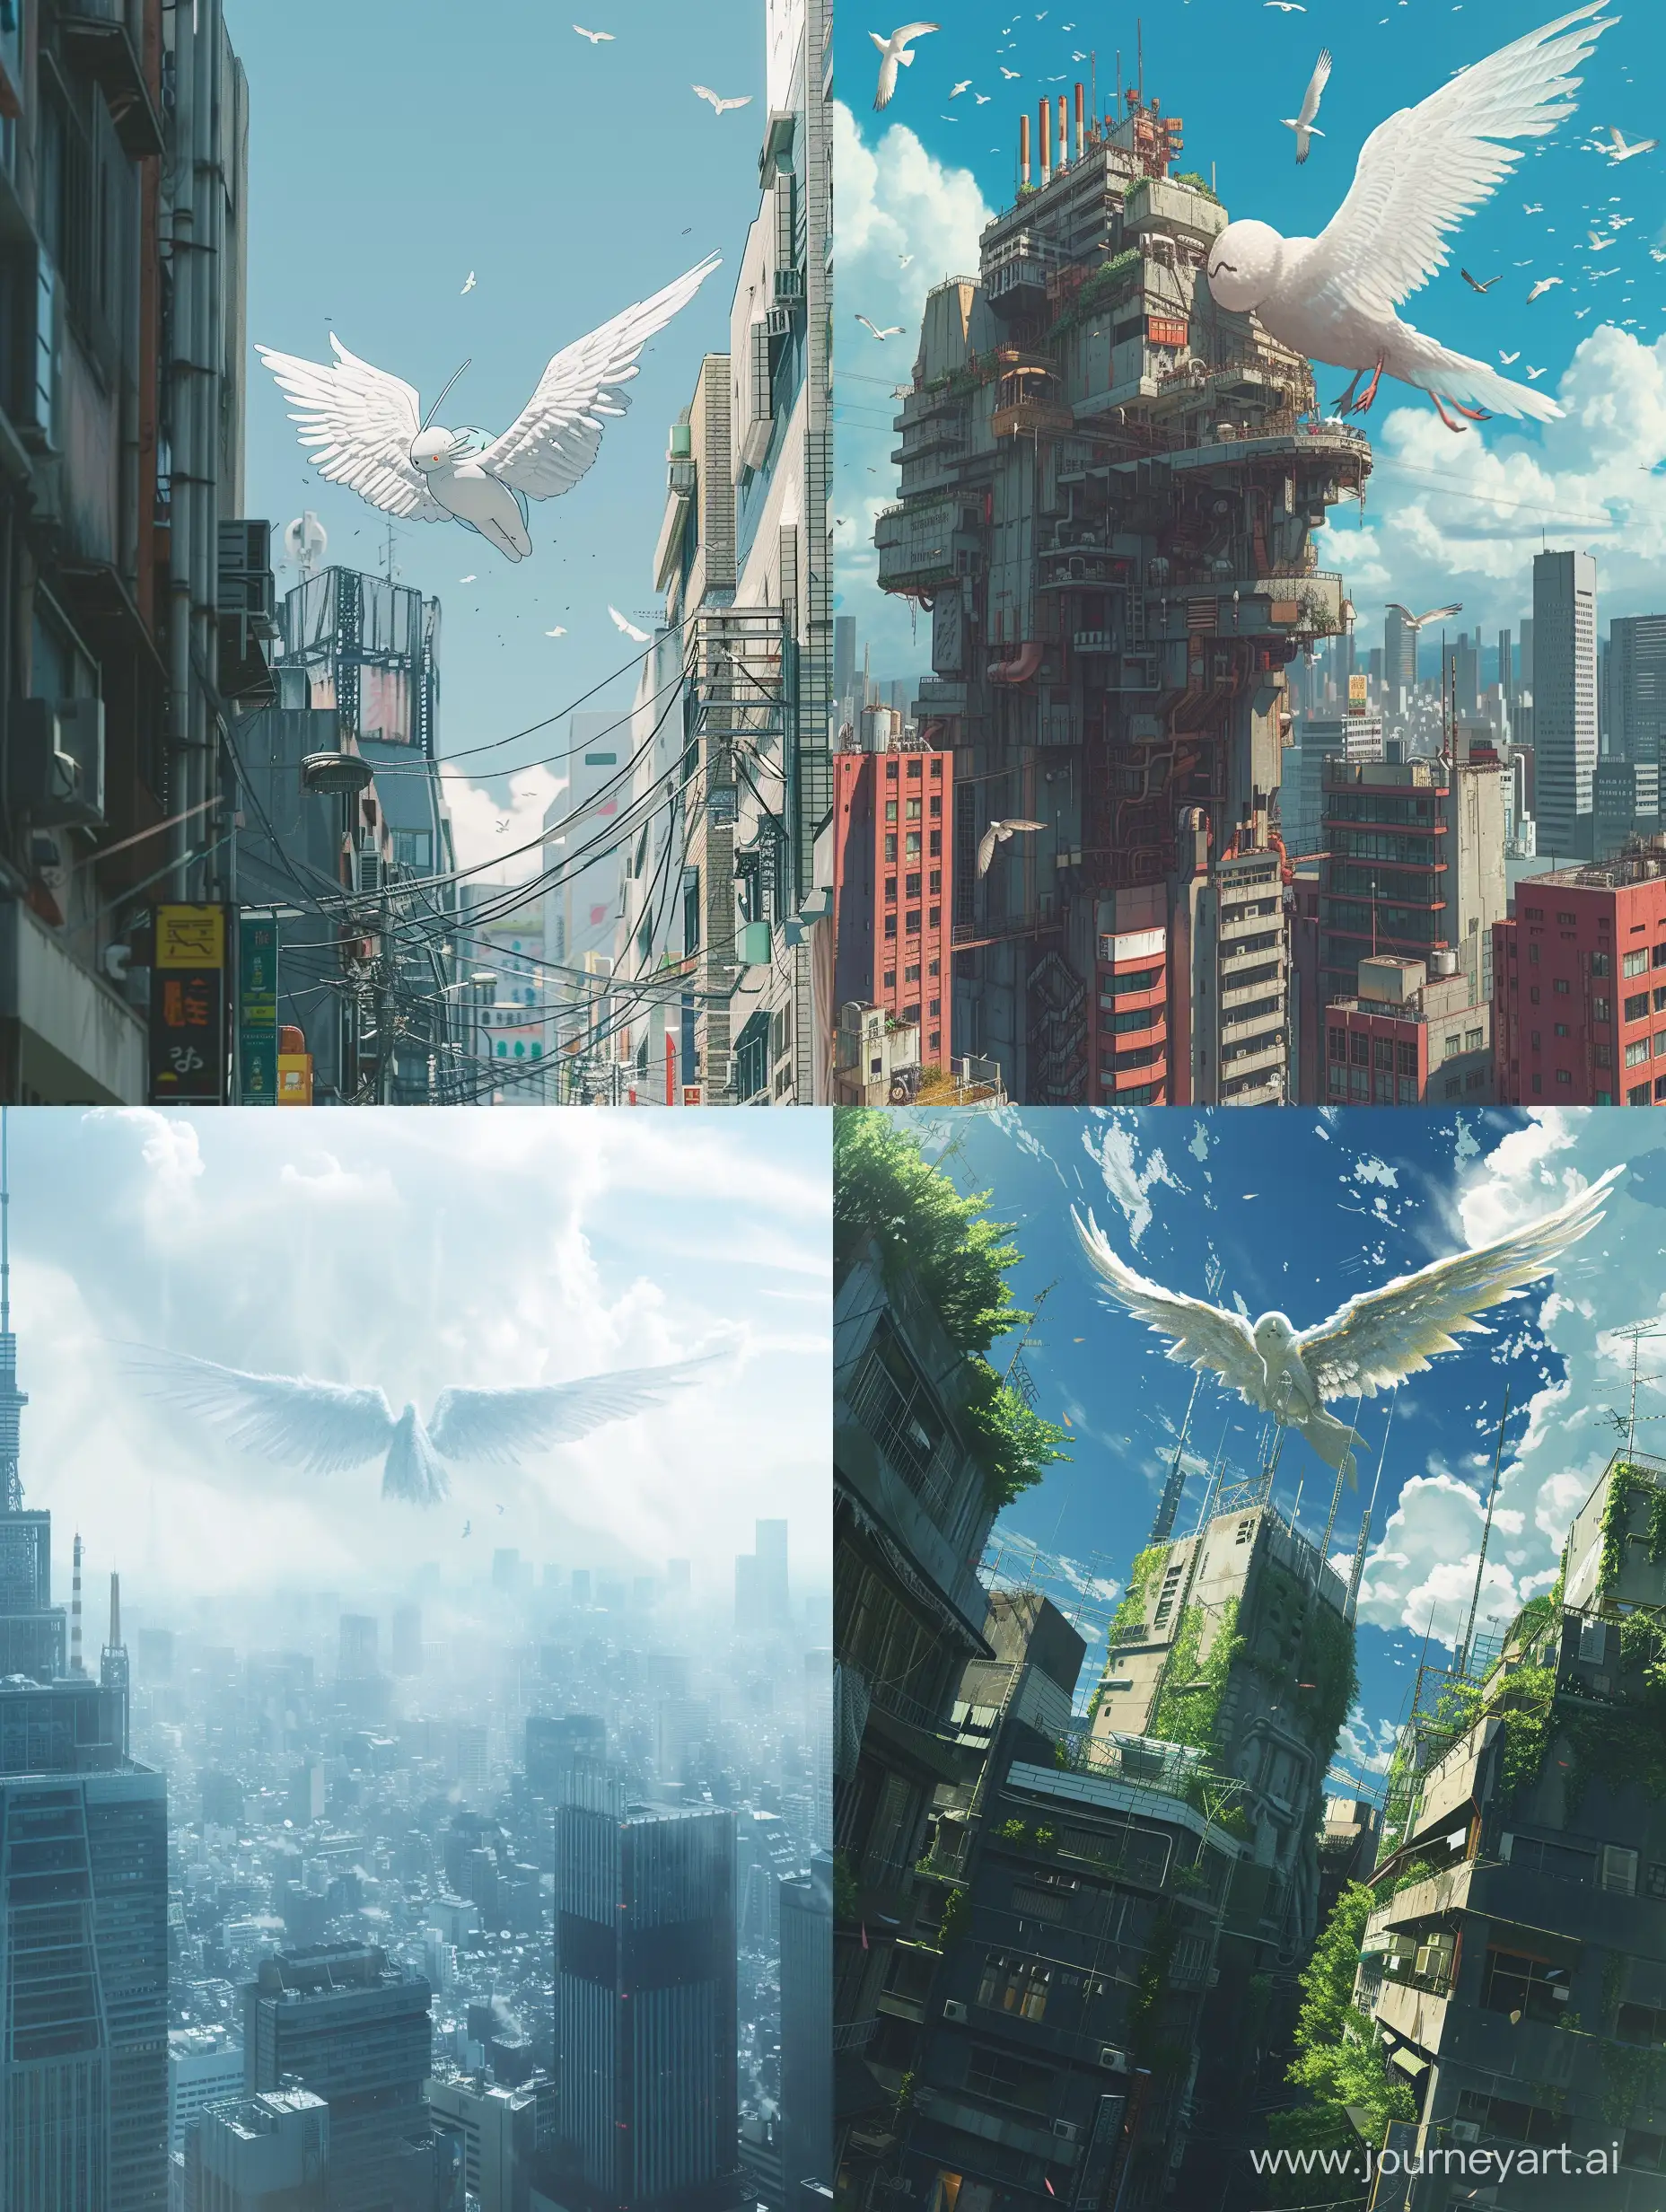 Tokyo-Skyline-Transformed-Studio-GhibliInspired-Brutalist-Flying-Object